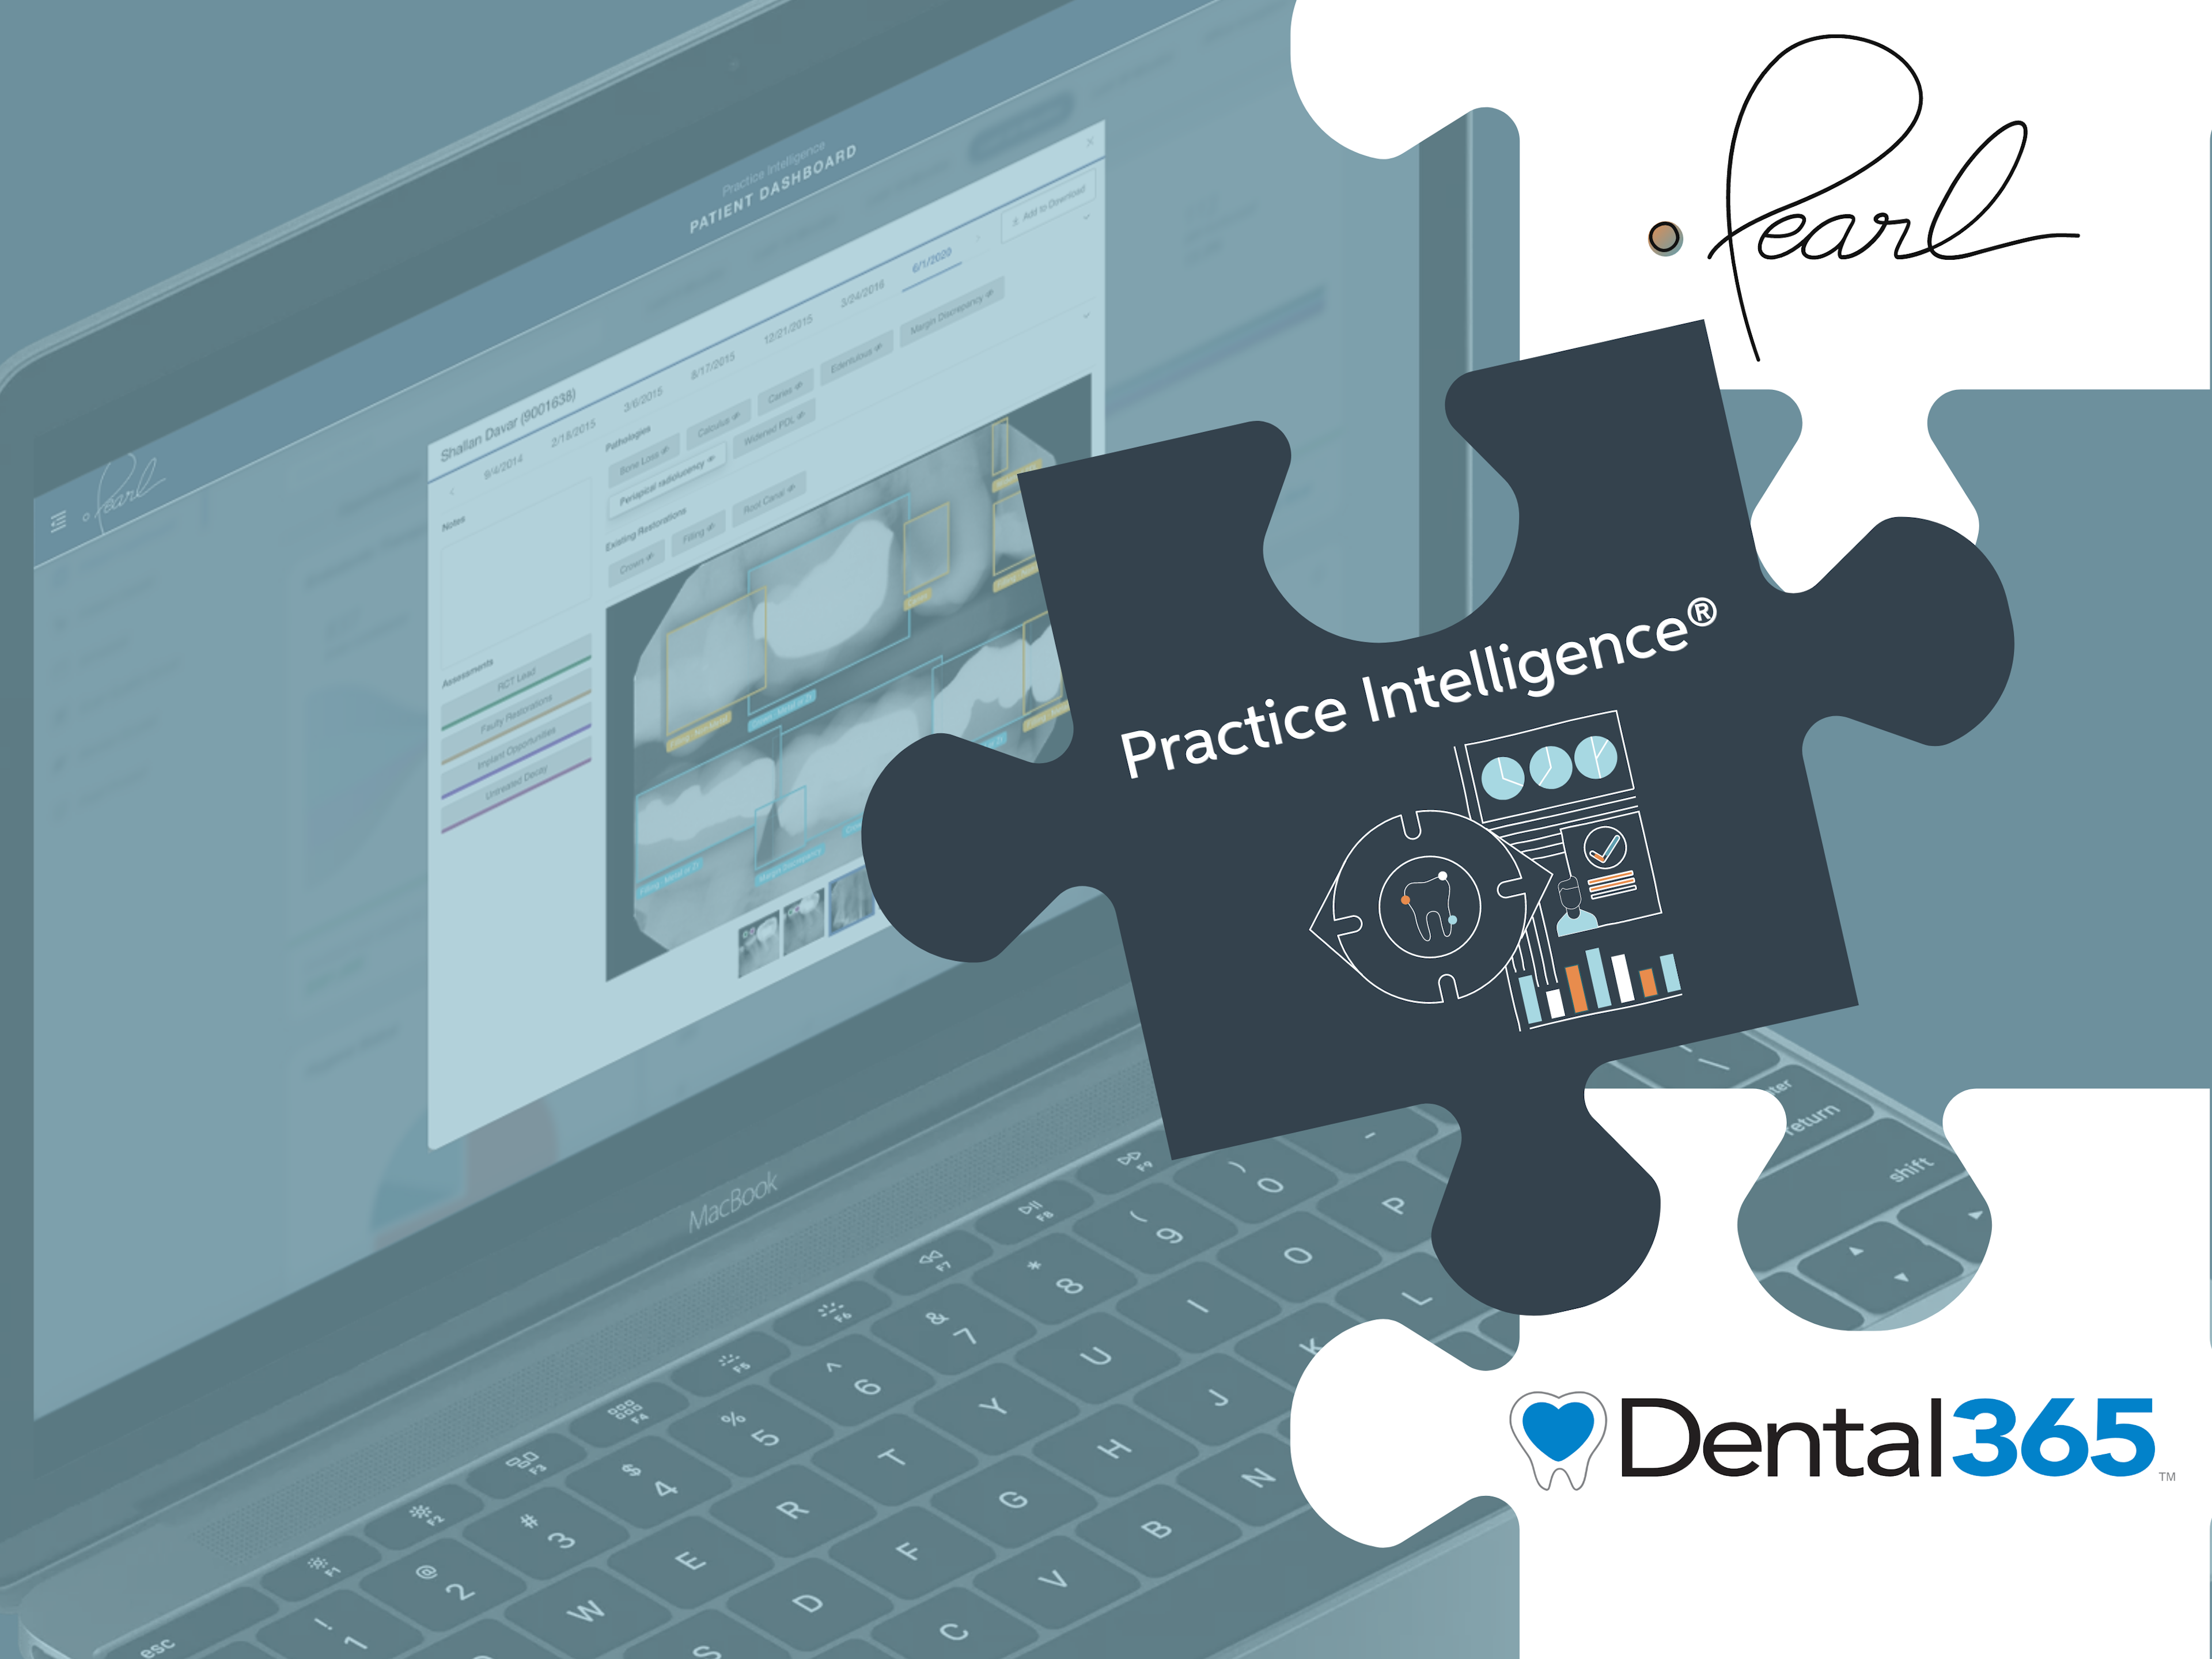 Pearl Partners with Dental Service Organization Dental365